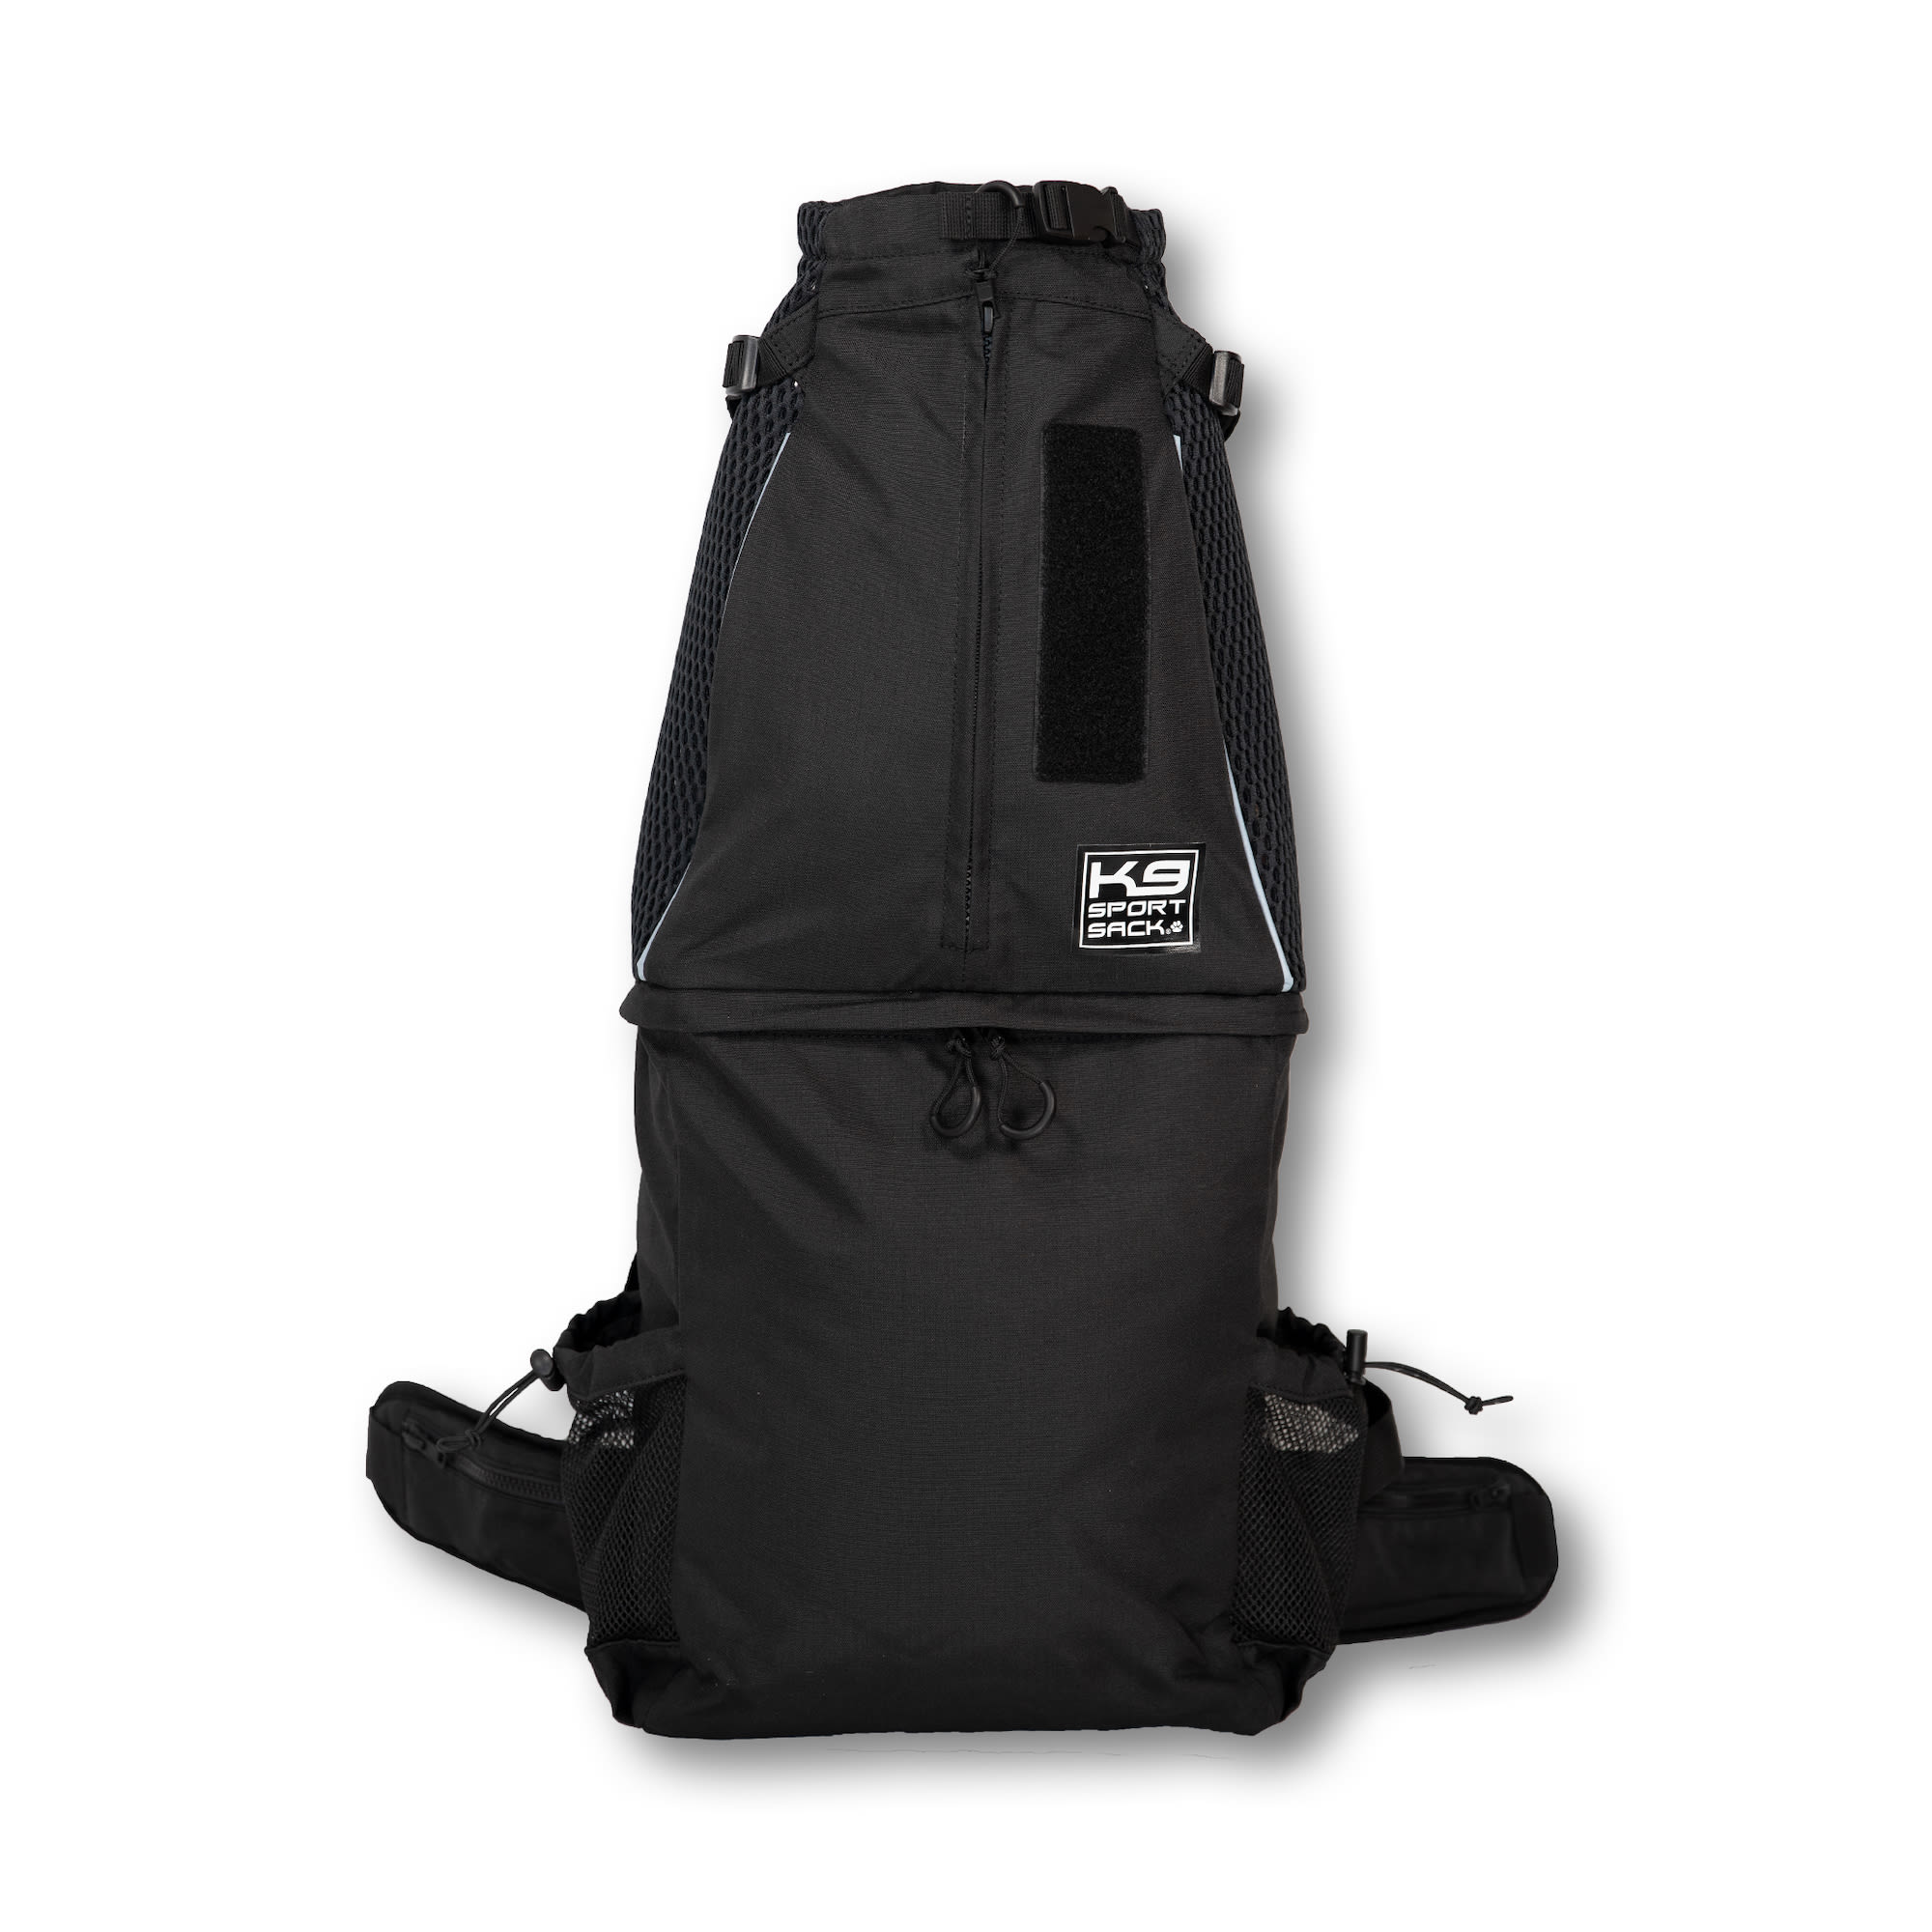 Bergan Heather Grey Backpack Pet Carrier, 11.5 L X 9 W X 17.5 H